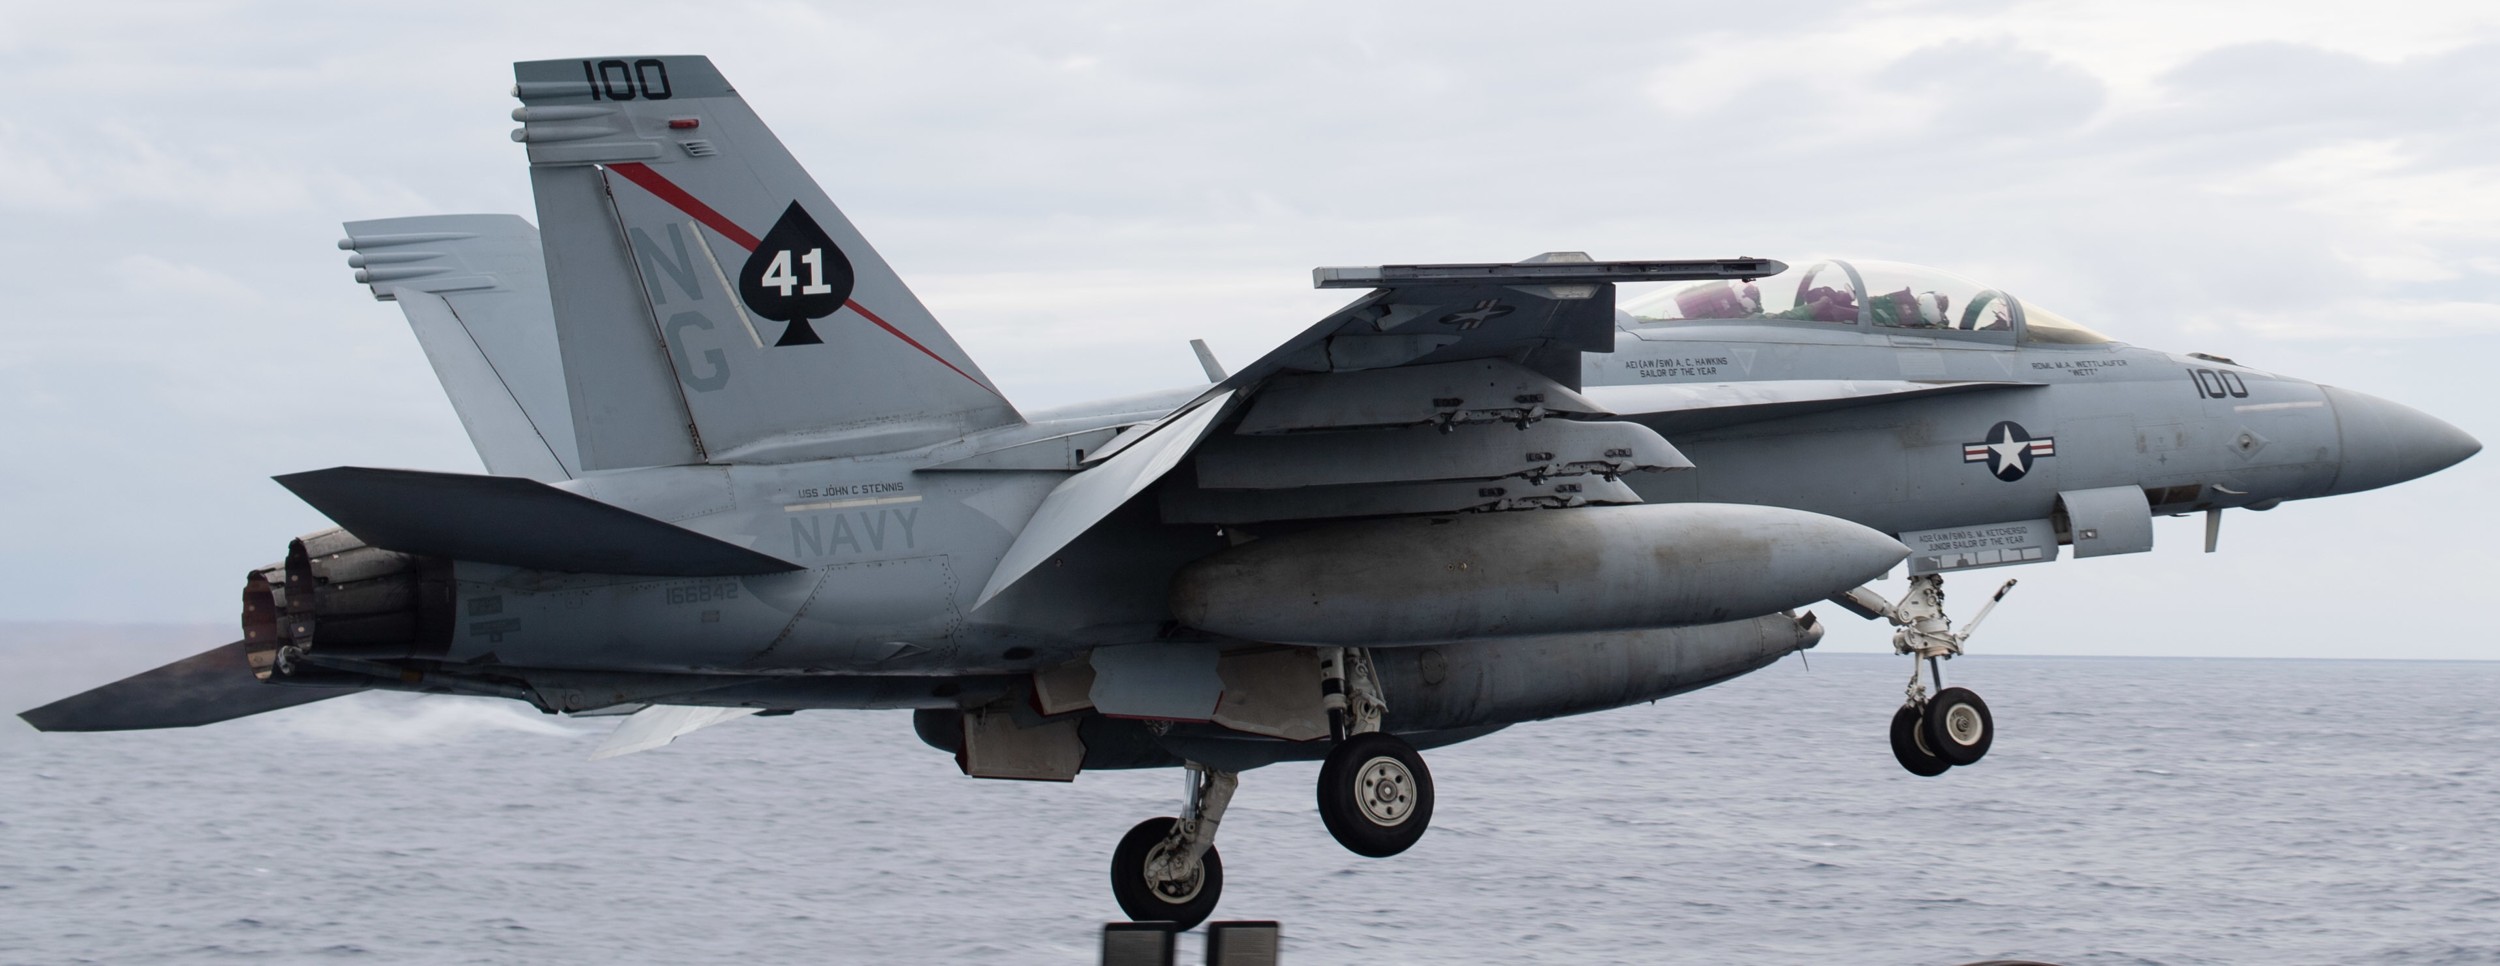 vfa-41 black aces strike fighter squadron f/a-18f super hornet cvw-9 cvn-70 uss john c. stennis us navy 46